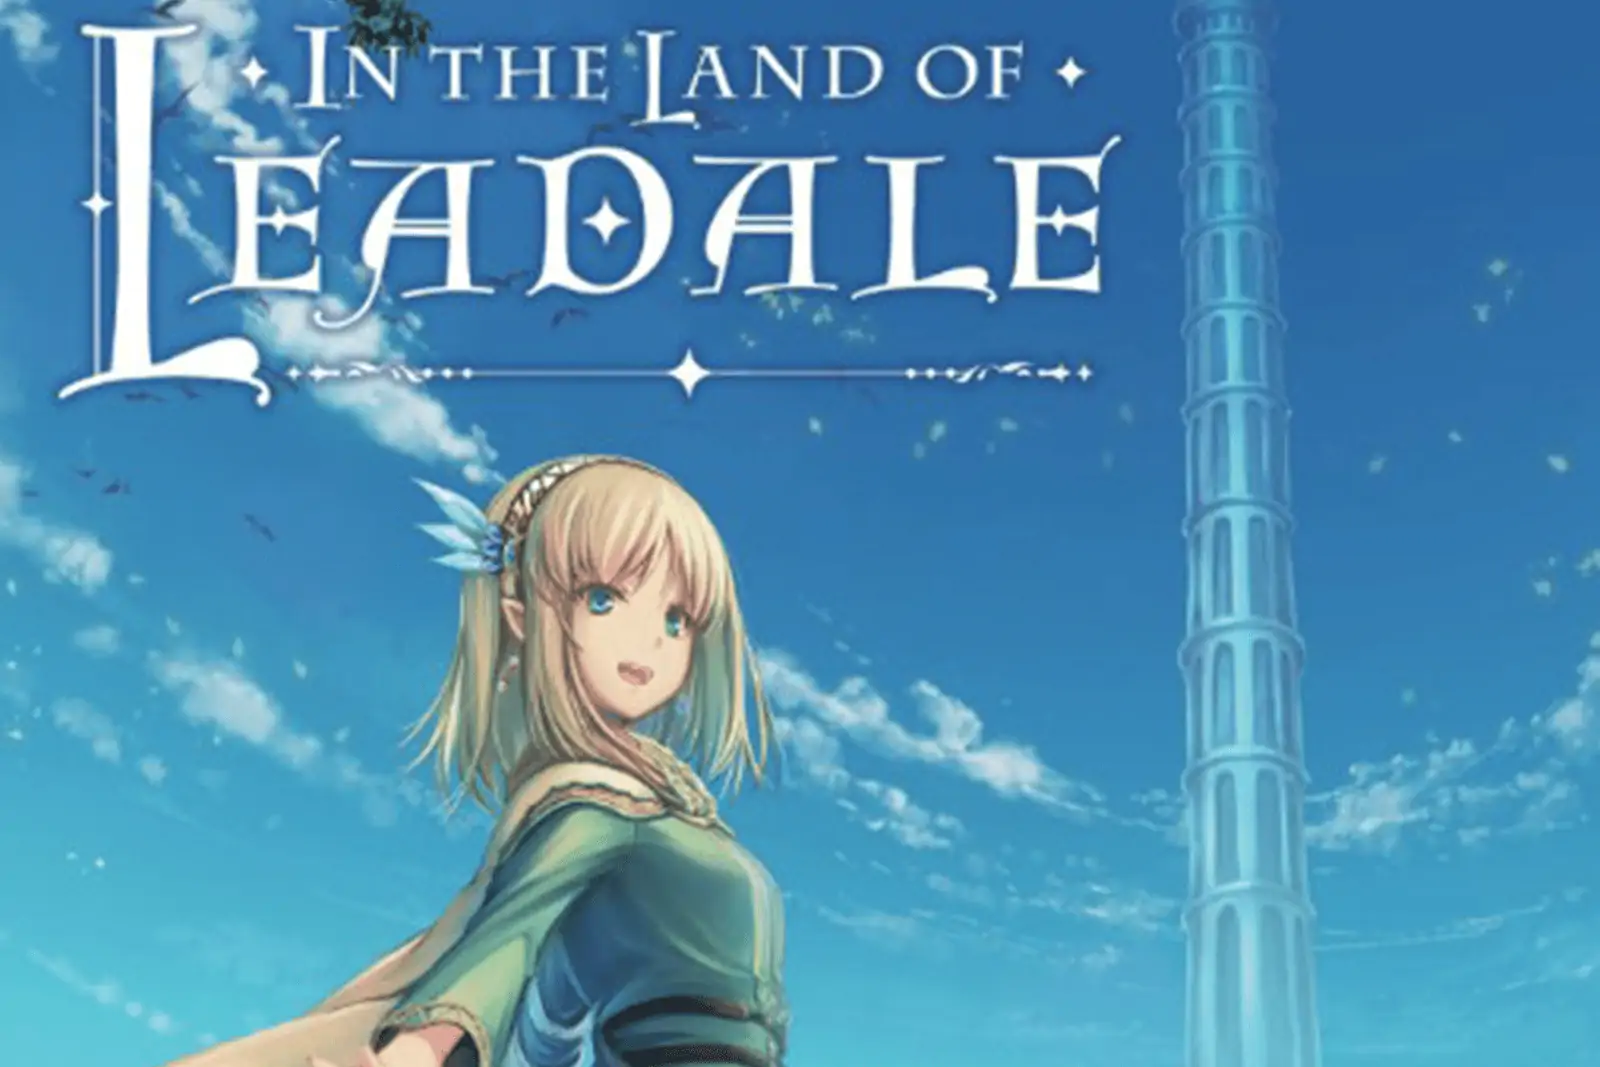 In the Land of Leadale, Vol. 1 (manga) by Tsukimi, Dashio